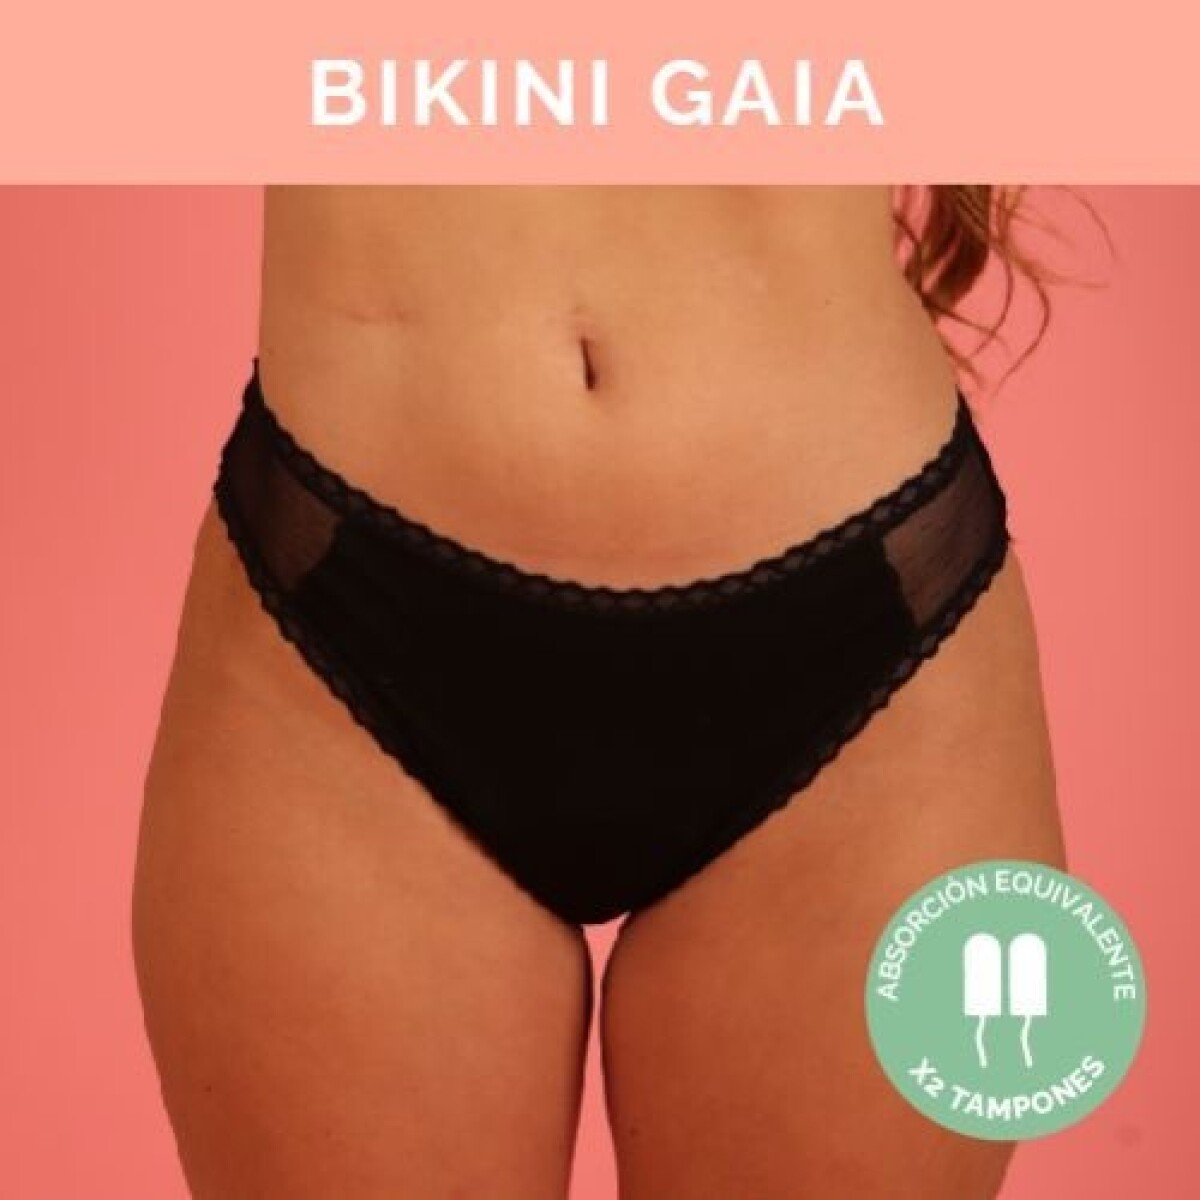 Bombacha Menstrual Bikini Gaia Puntilla Talle S 